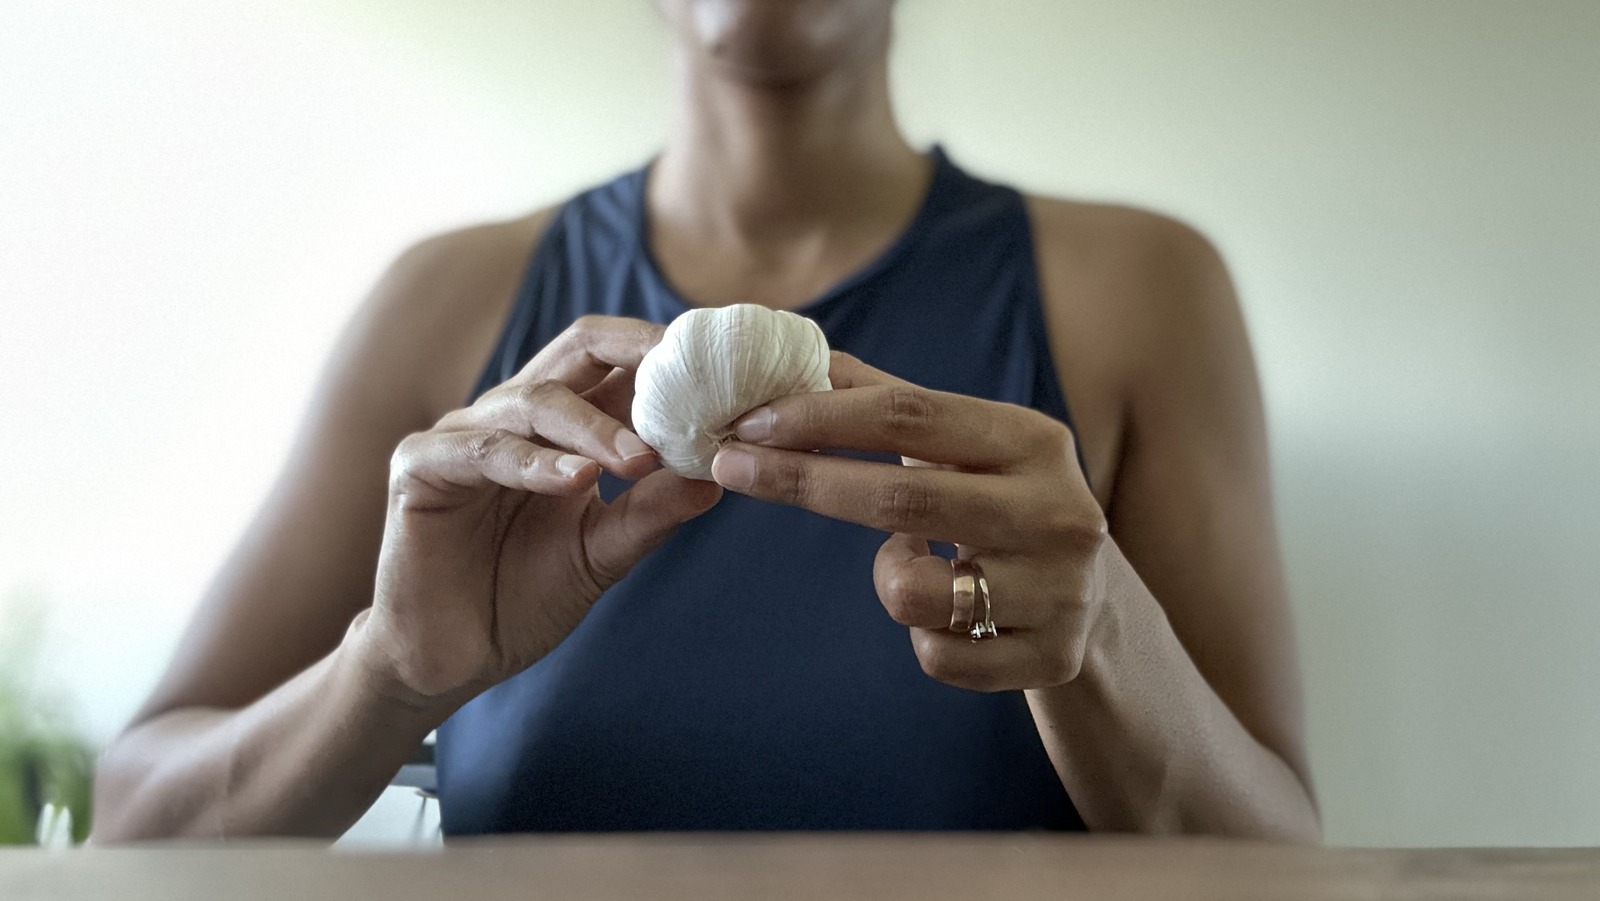 We Tried Rubbing Garlic All Over Our Feet Just Like Priyanka Chopra. Here’s What Happened – Health Digest